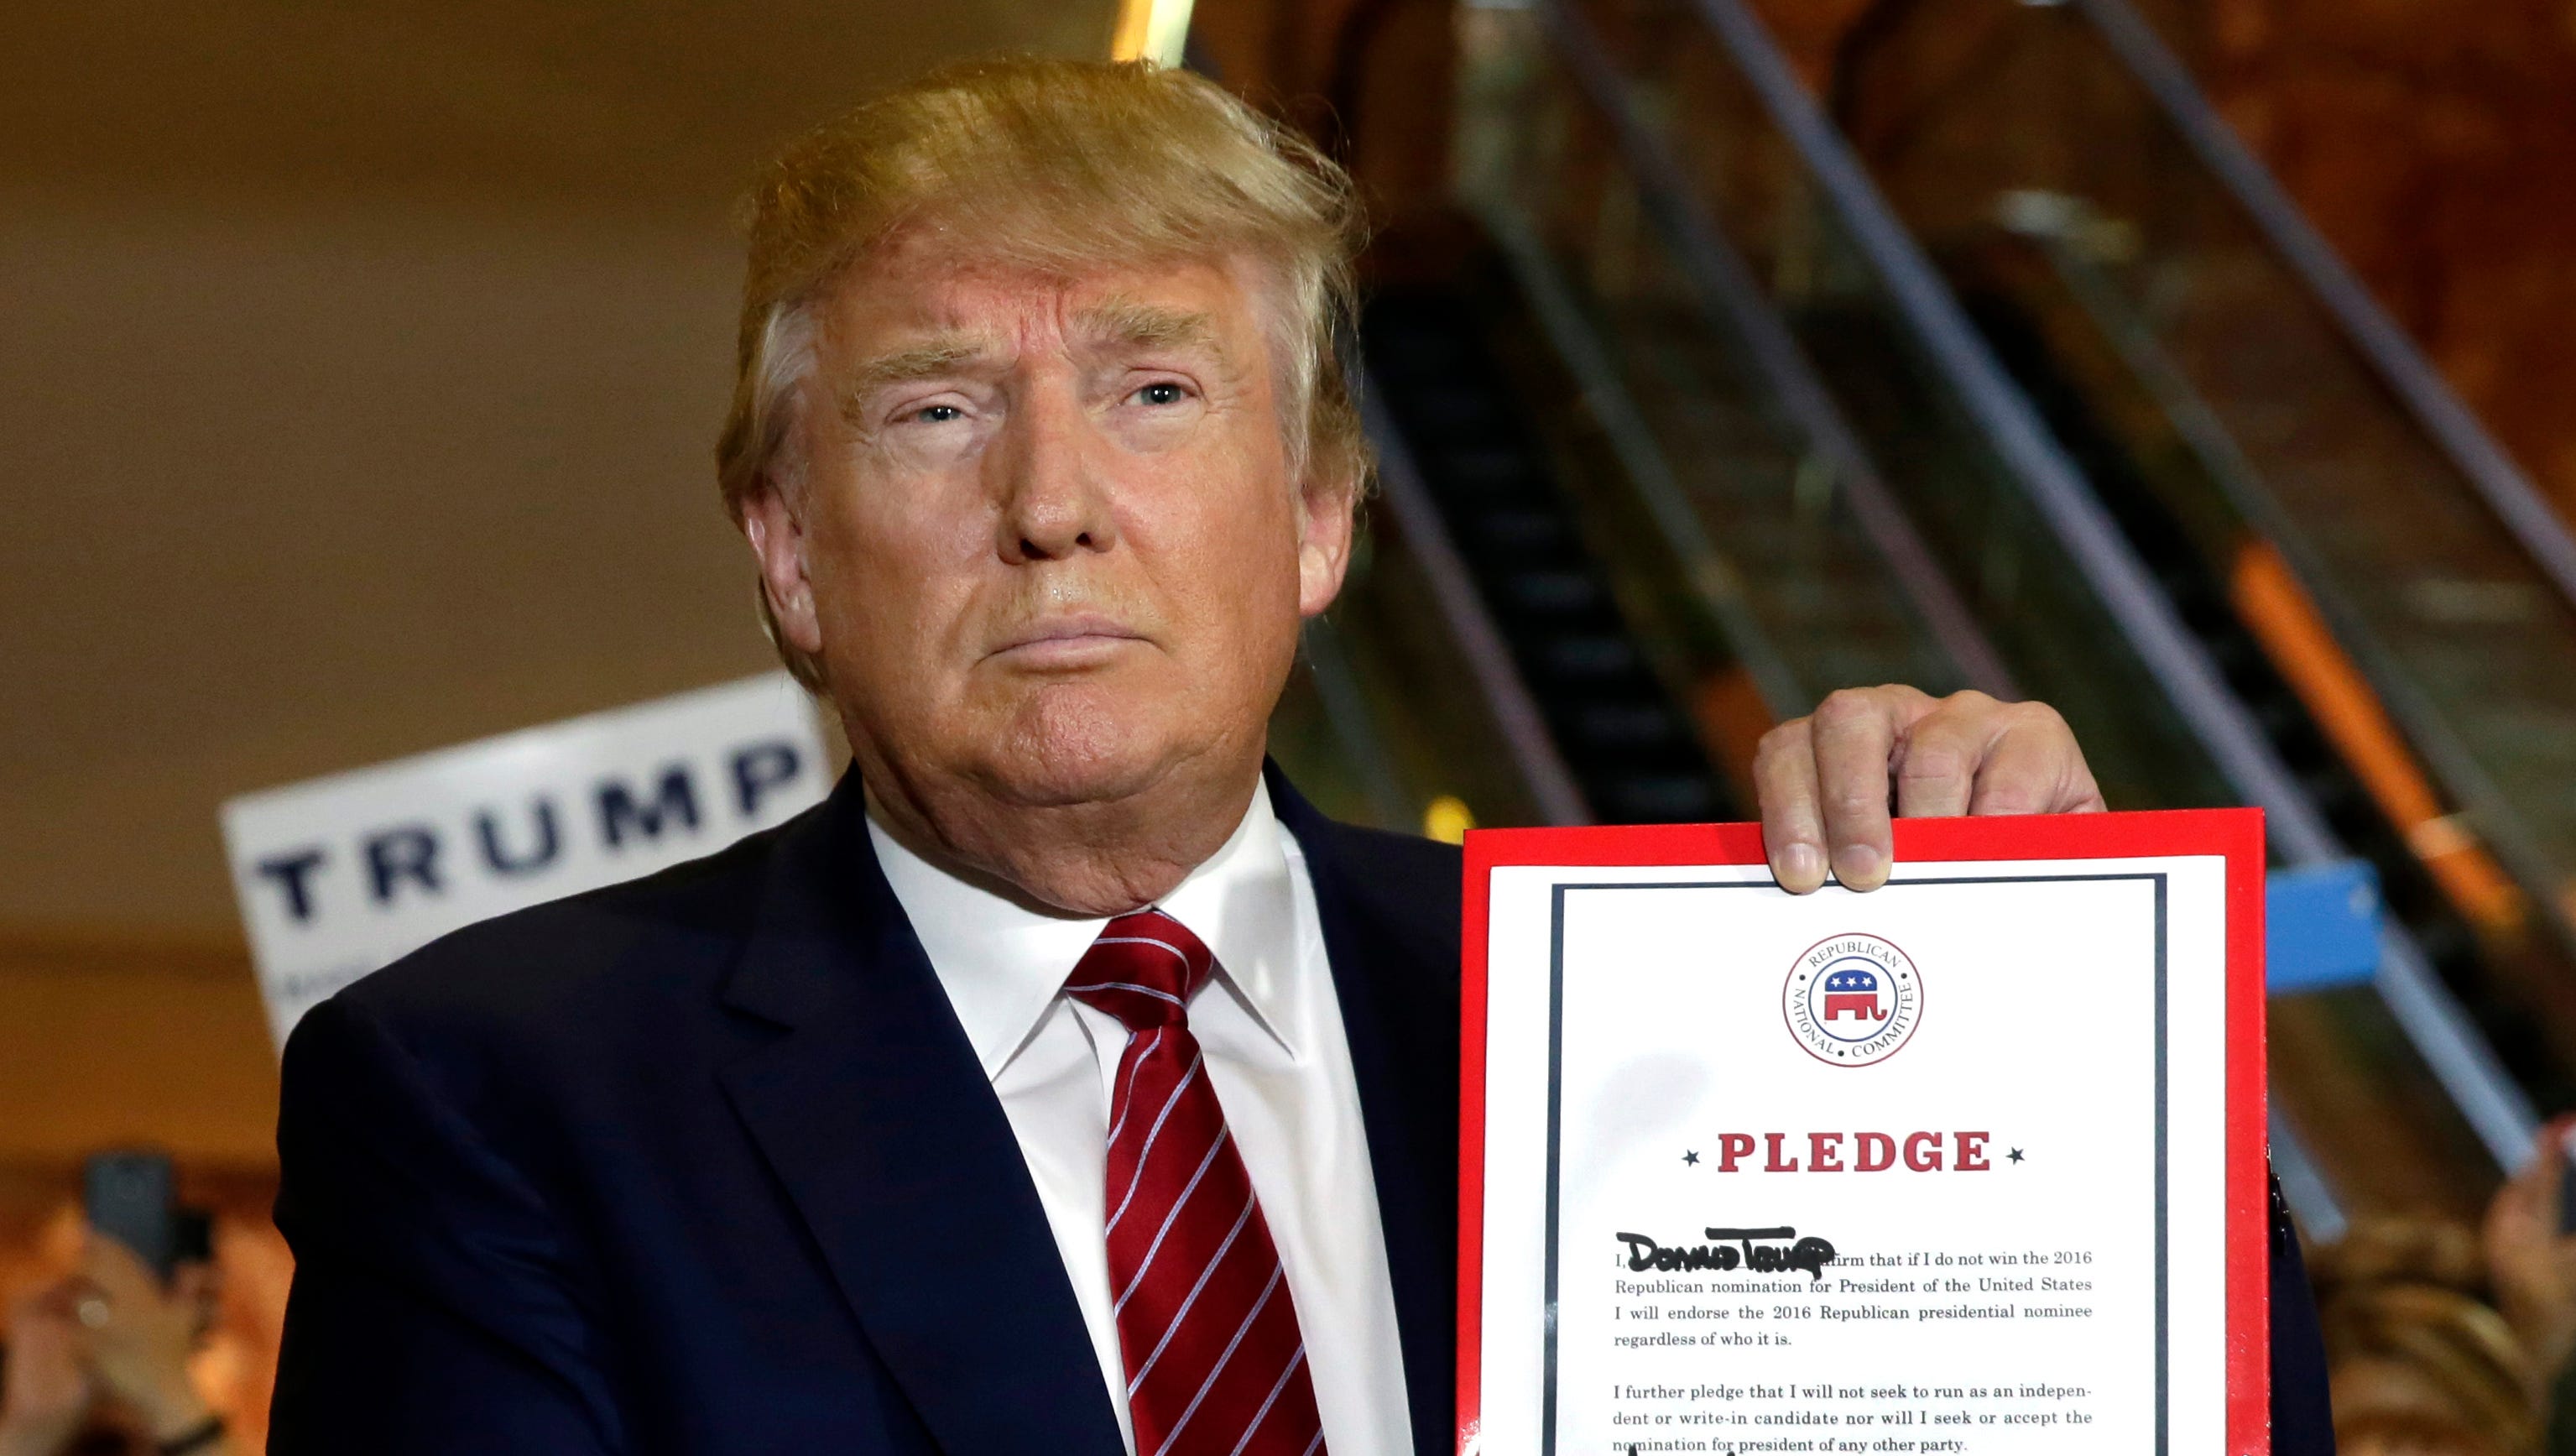 Trump Signs Loyalty Pledge To Republicans